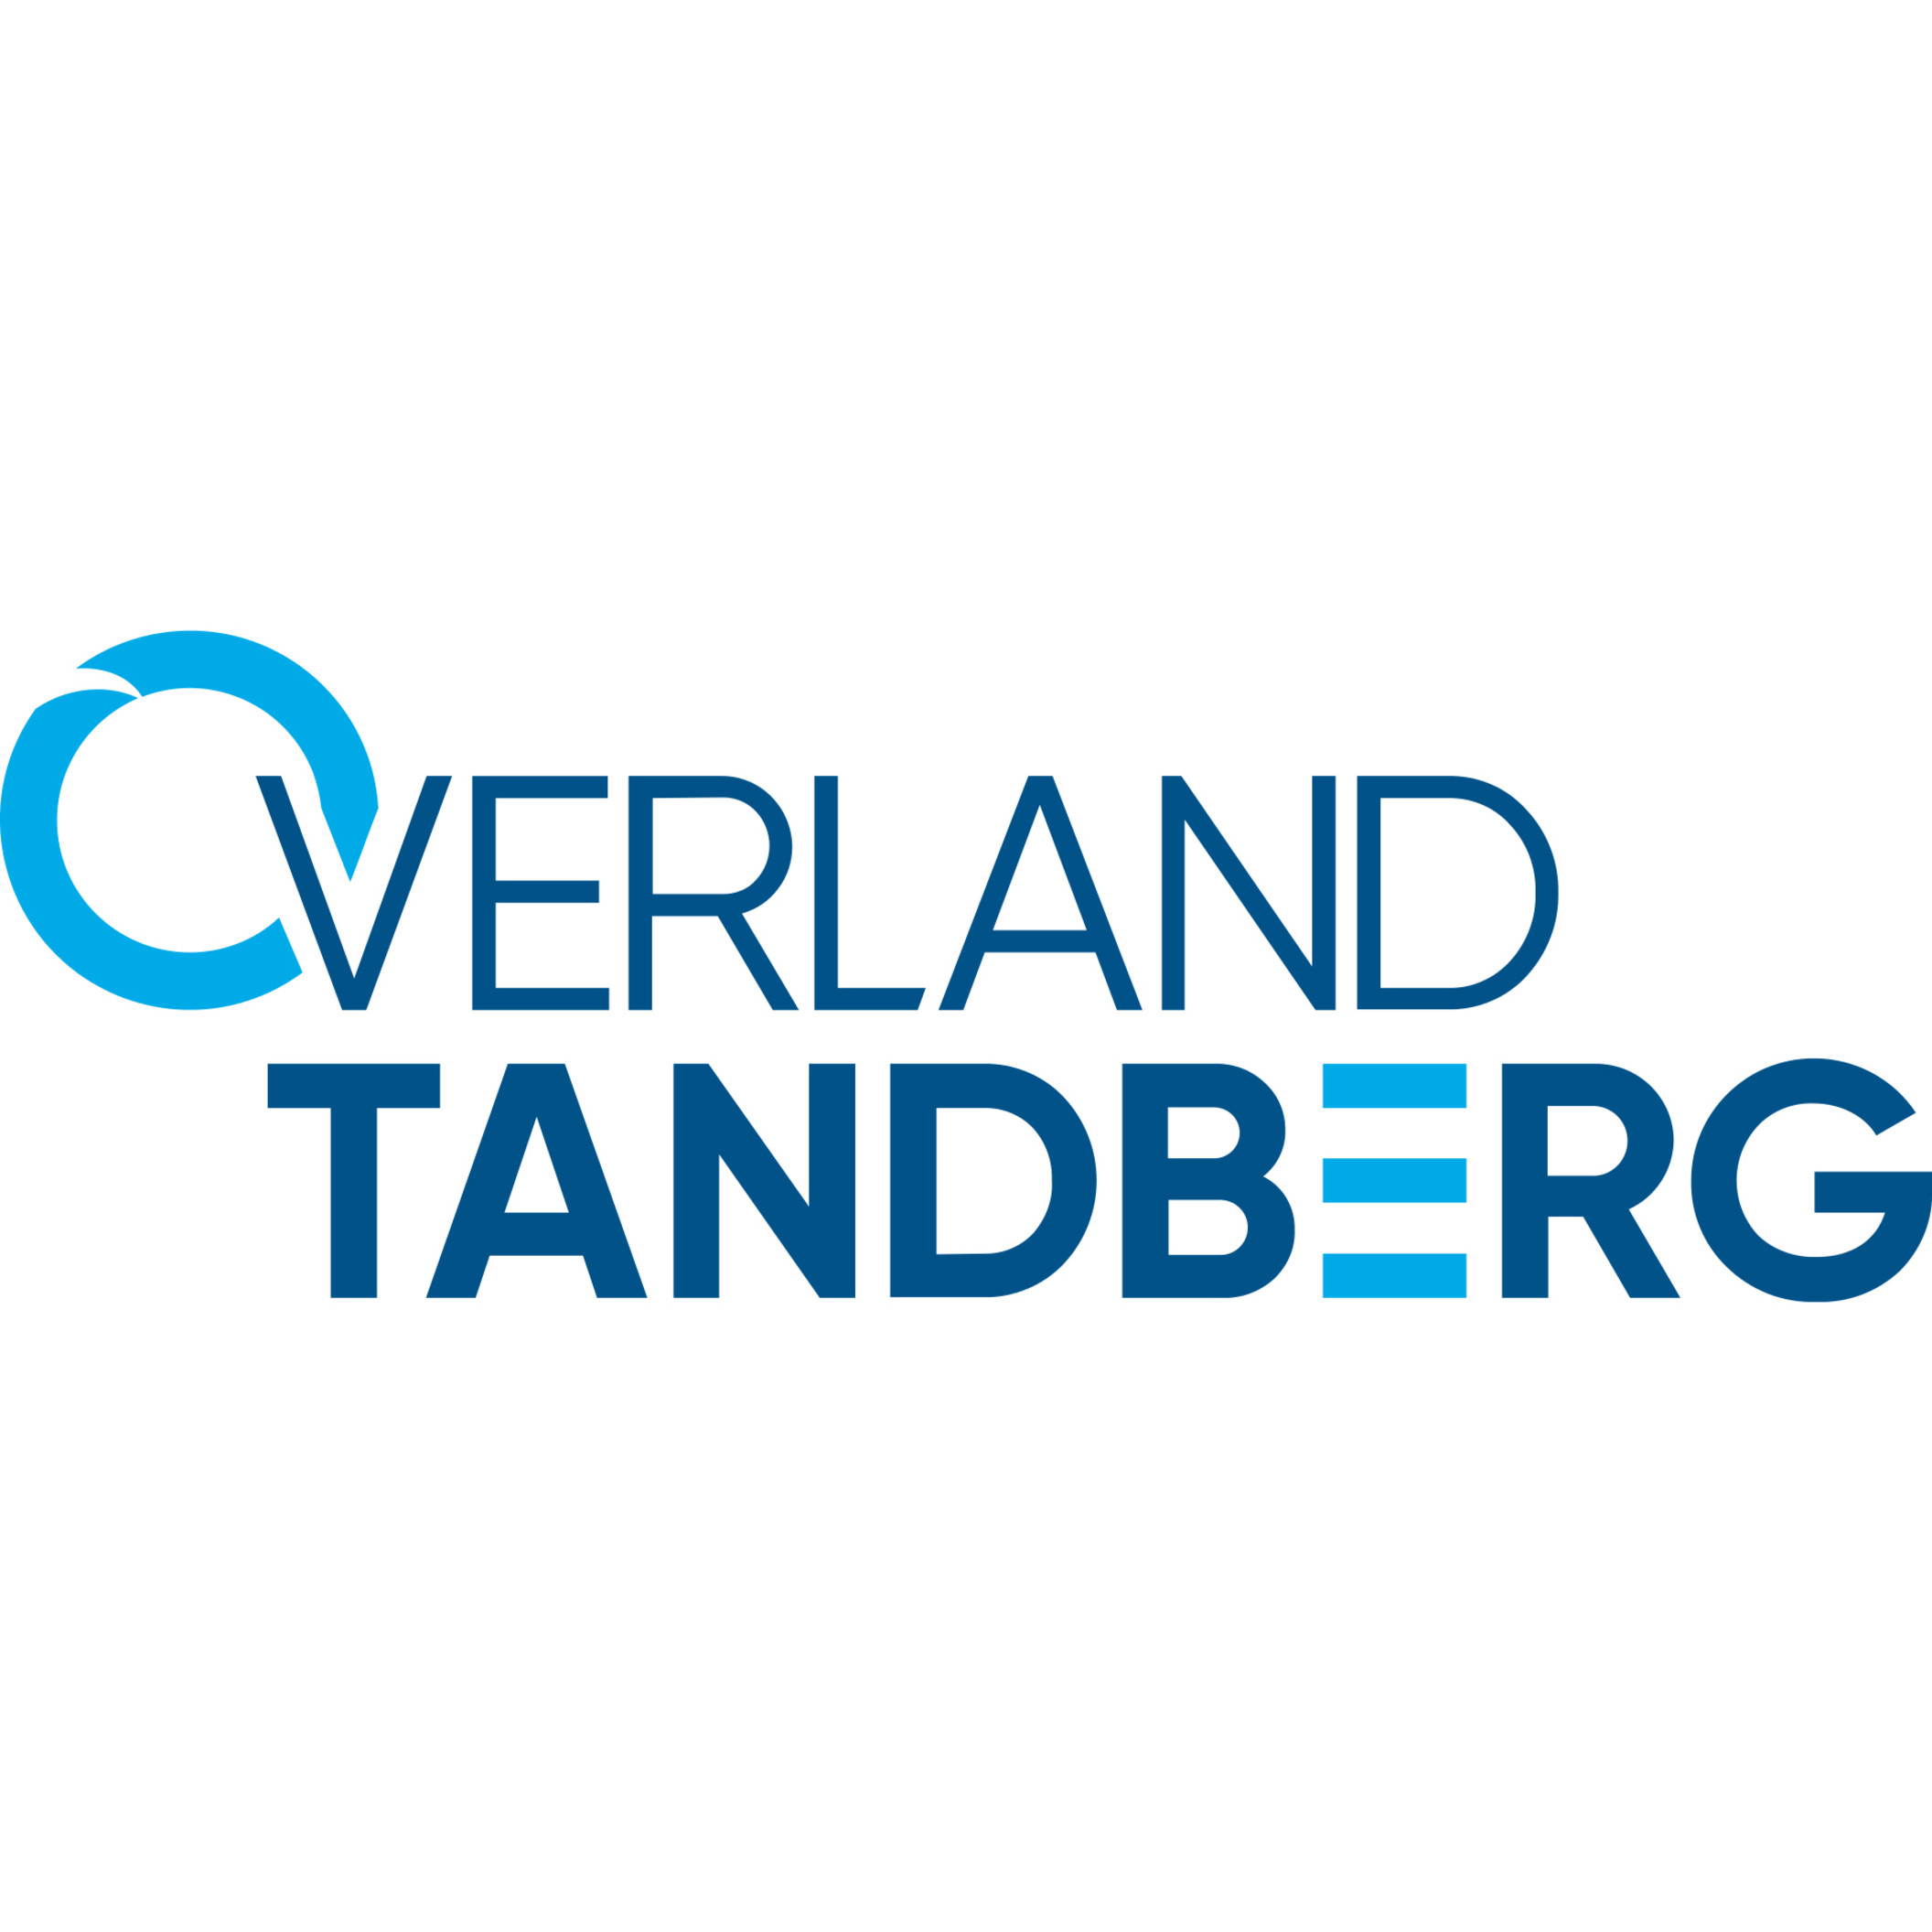 Overland rdxLOCK + s Care Bronze-LevelLicense1 TB CapacityPC 8868-SW